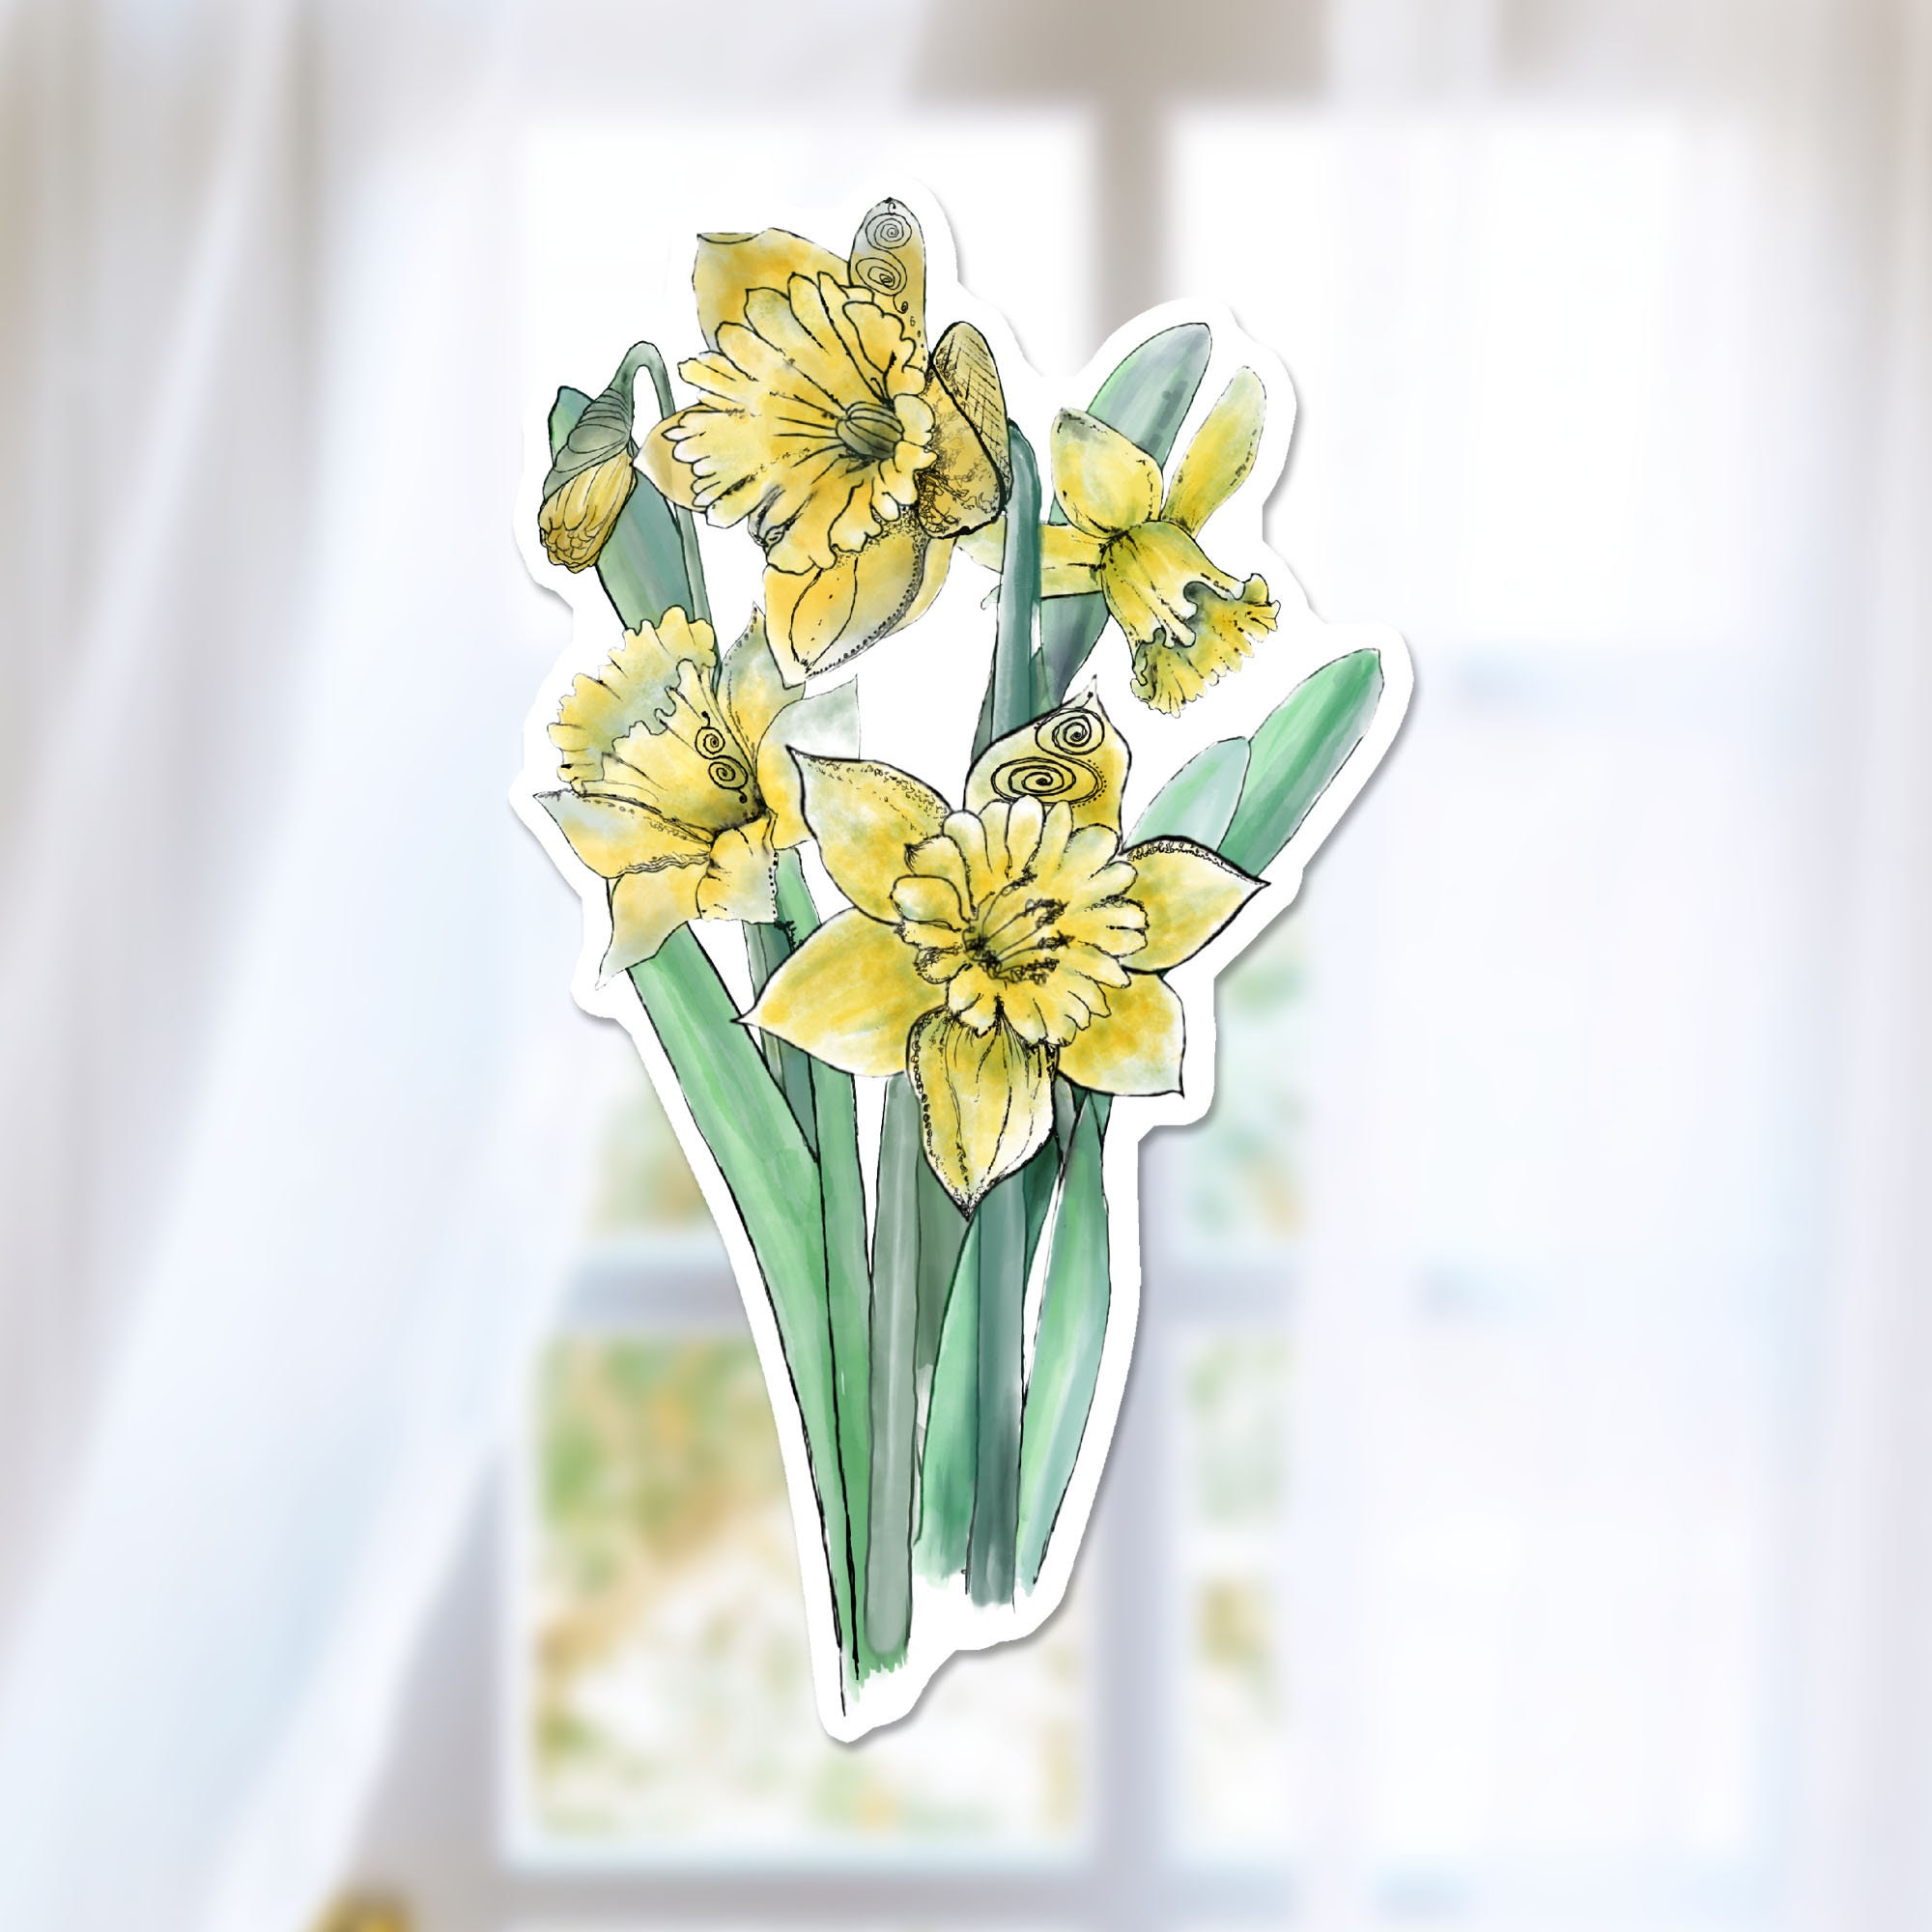 Daffodil Metal Design Stamp, March Birth Month Flower, 11mm - Beaducation Original